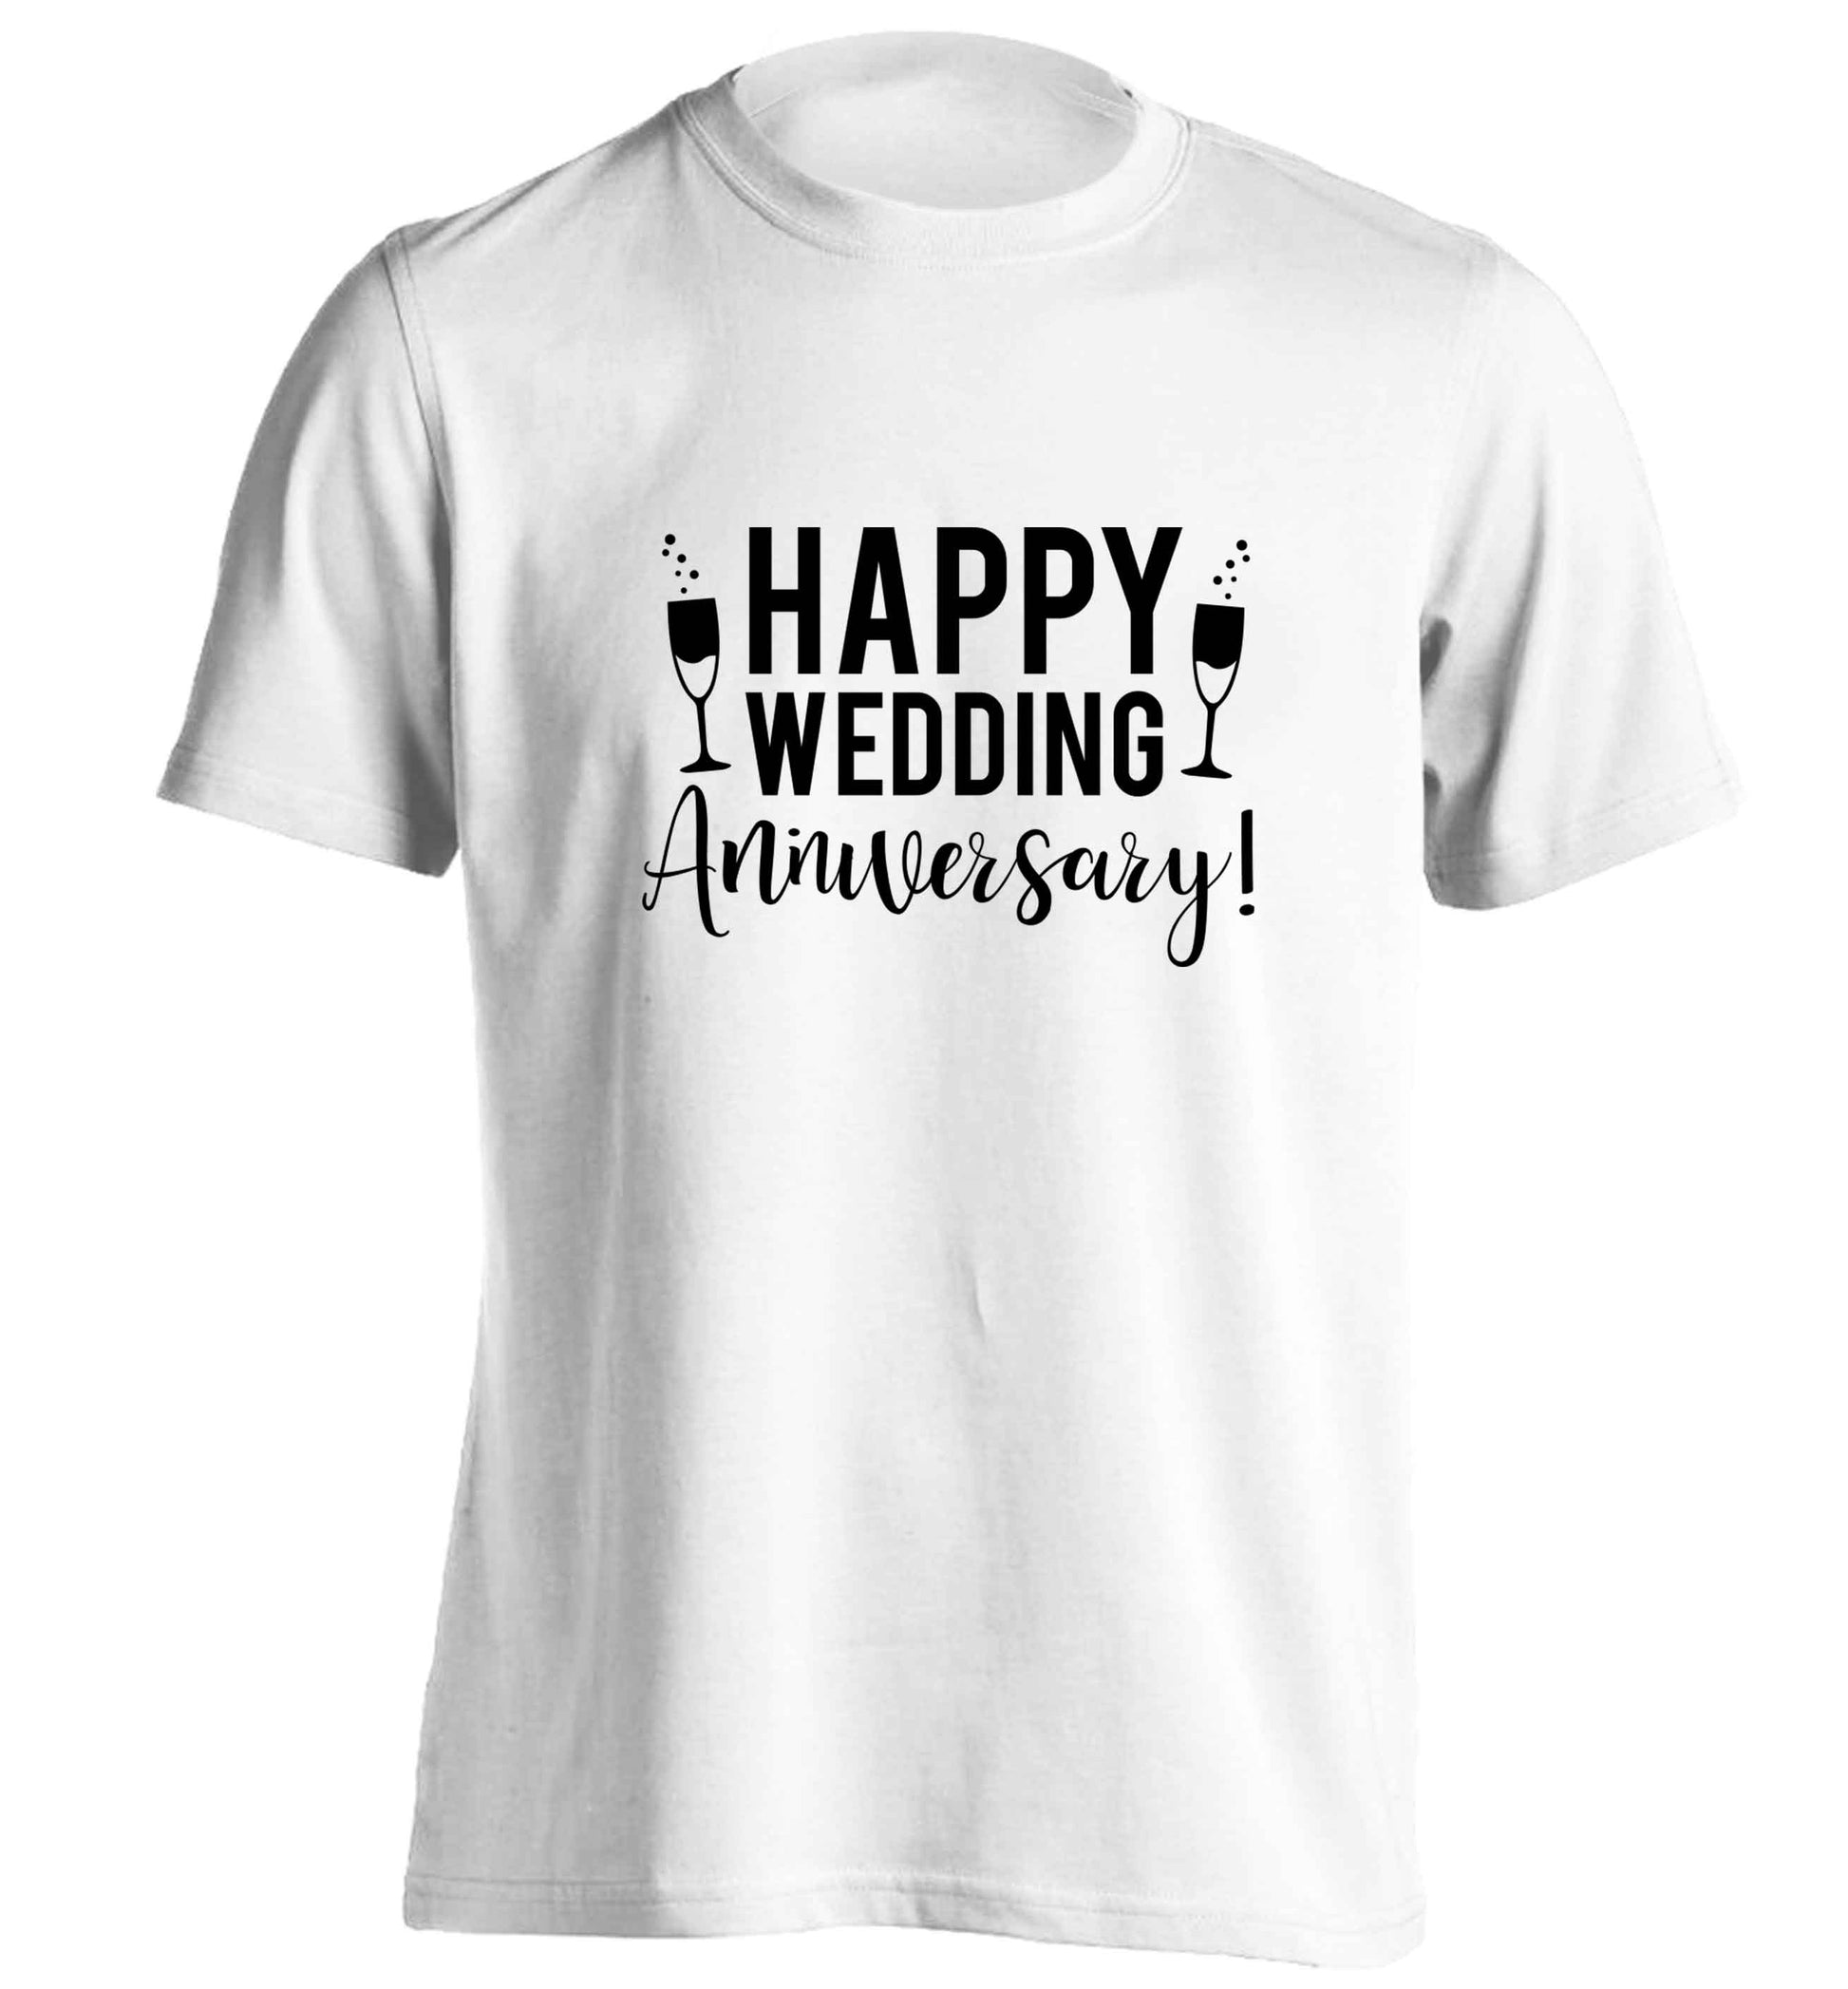 Happy wedding anniversary! adults unisex white Tshirt 2XL